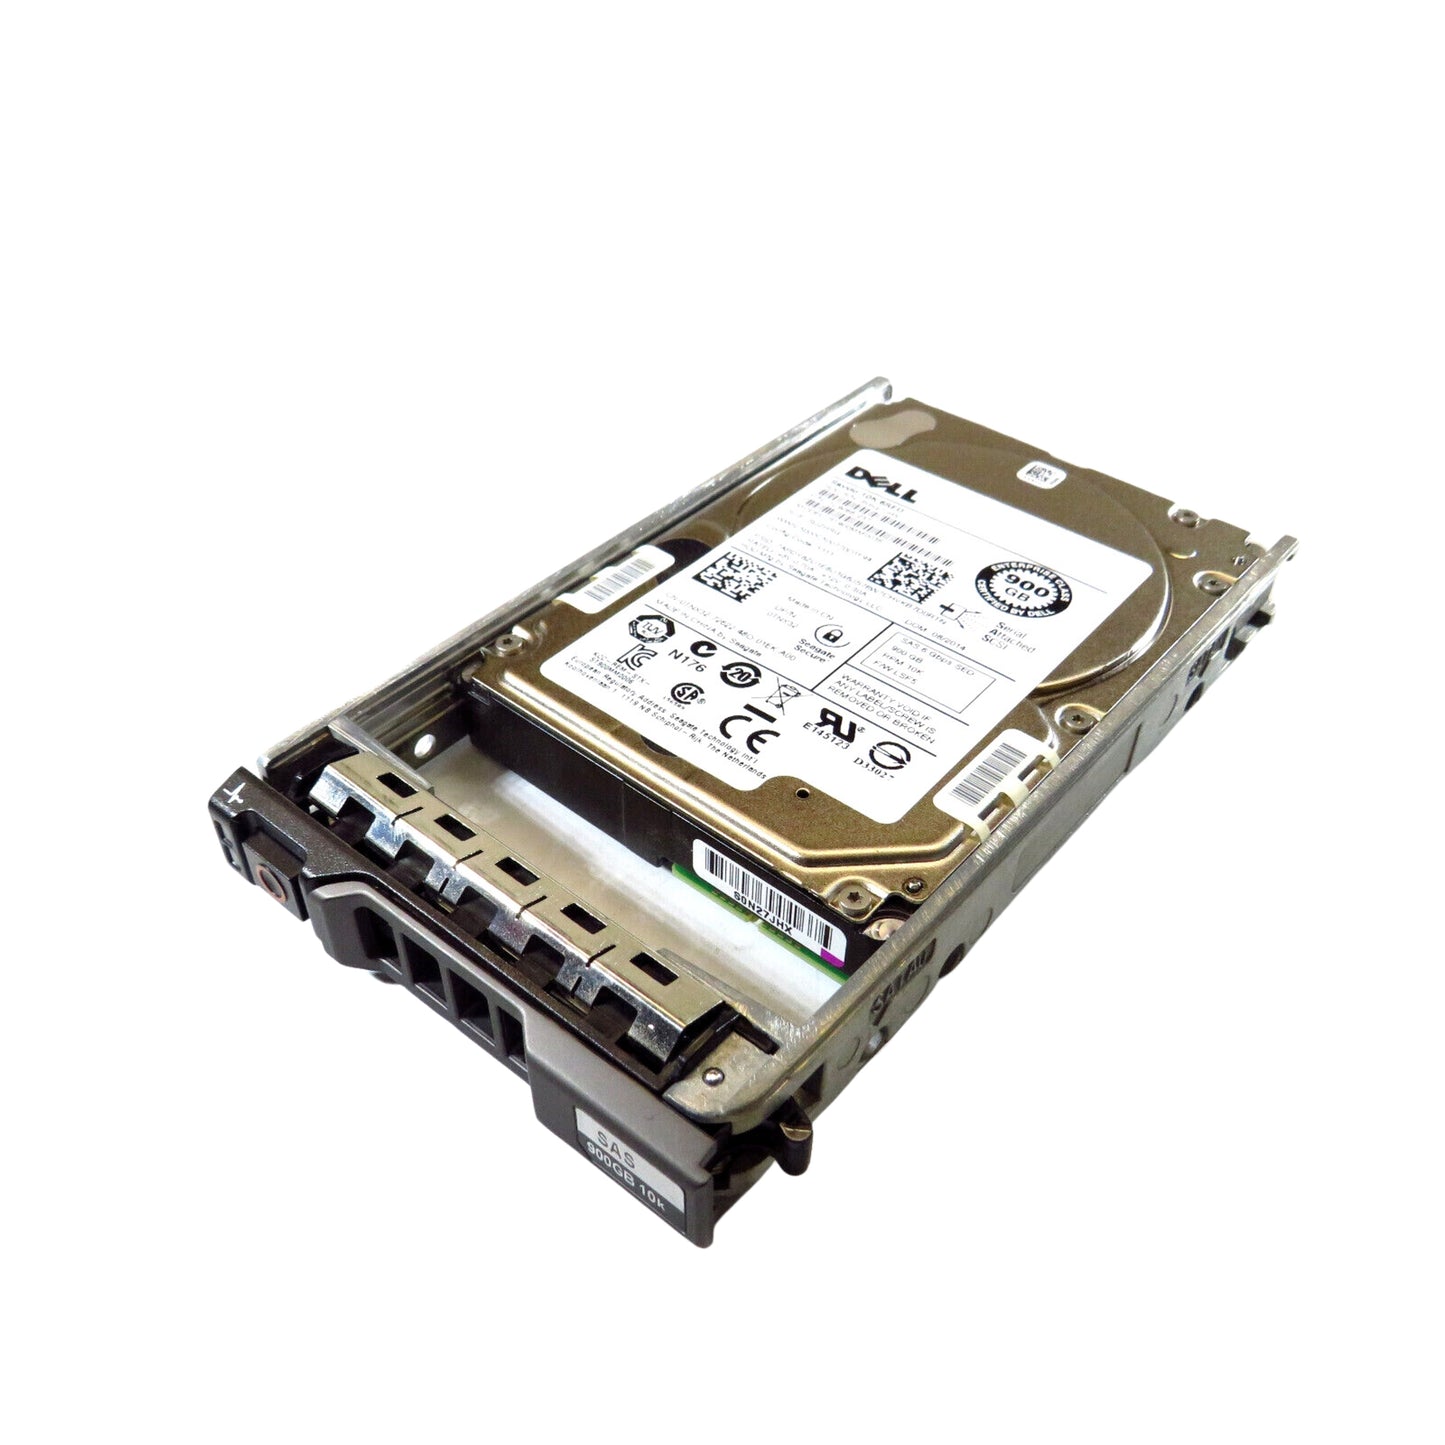 Dell TNX32 2.5" 900GB 10000RPM SAS 6Gb/s Hard Disk Drive (HDD), Silver (Refurbished)